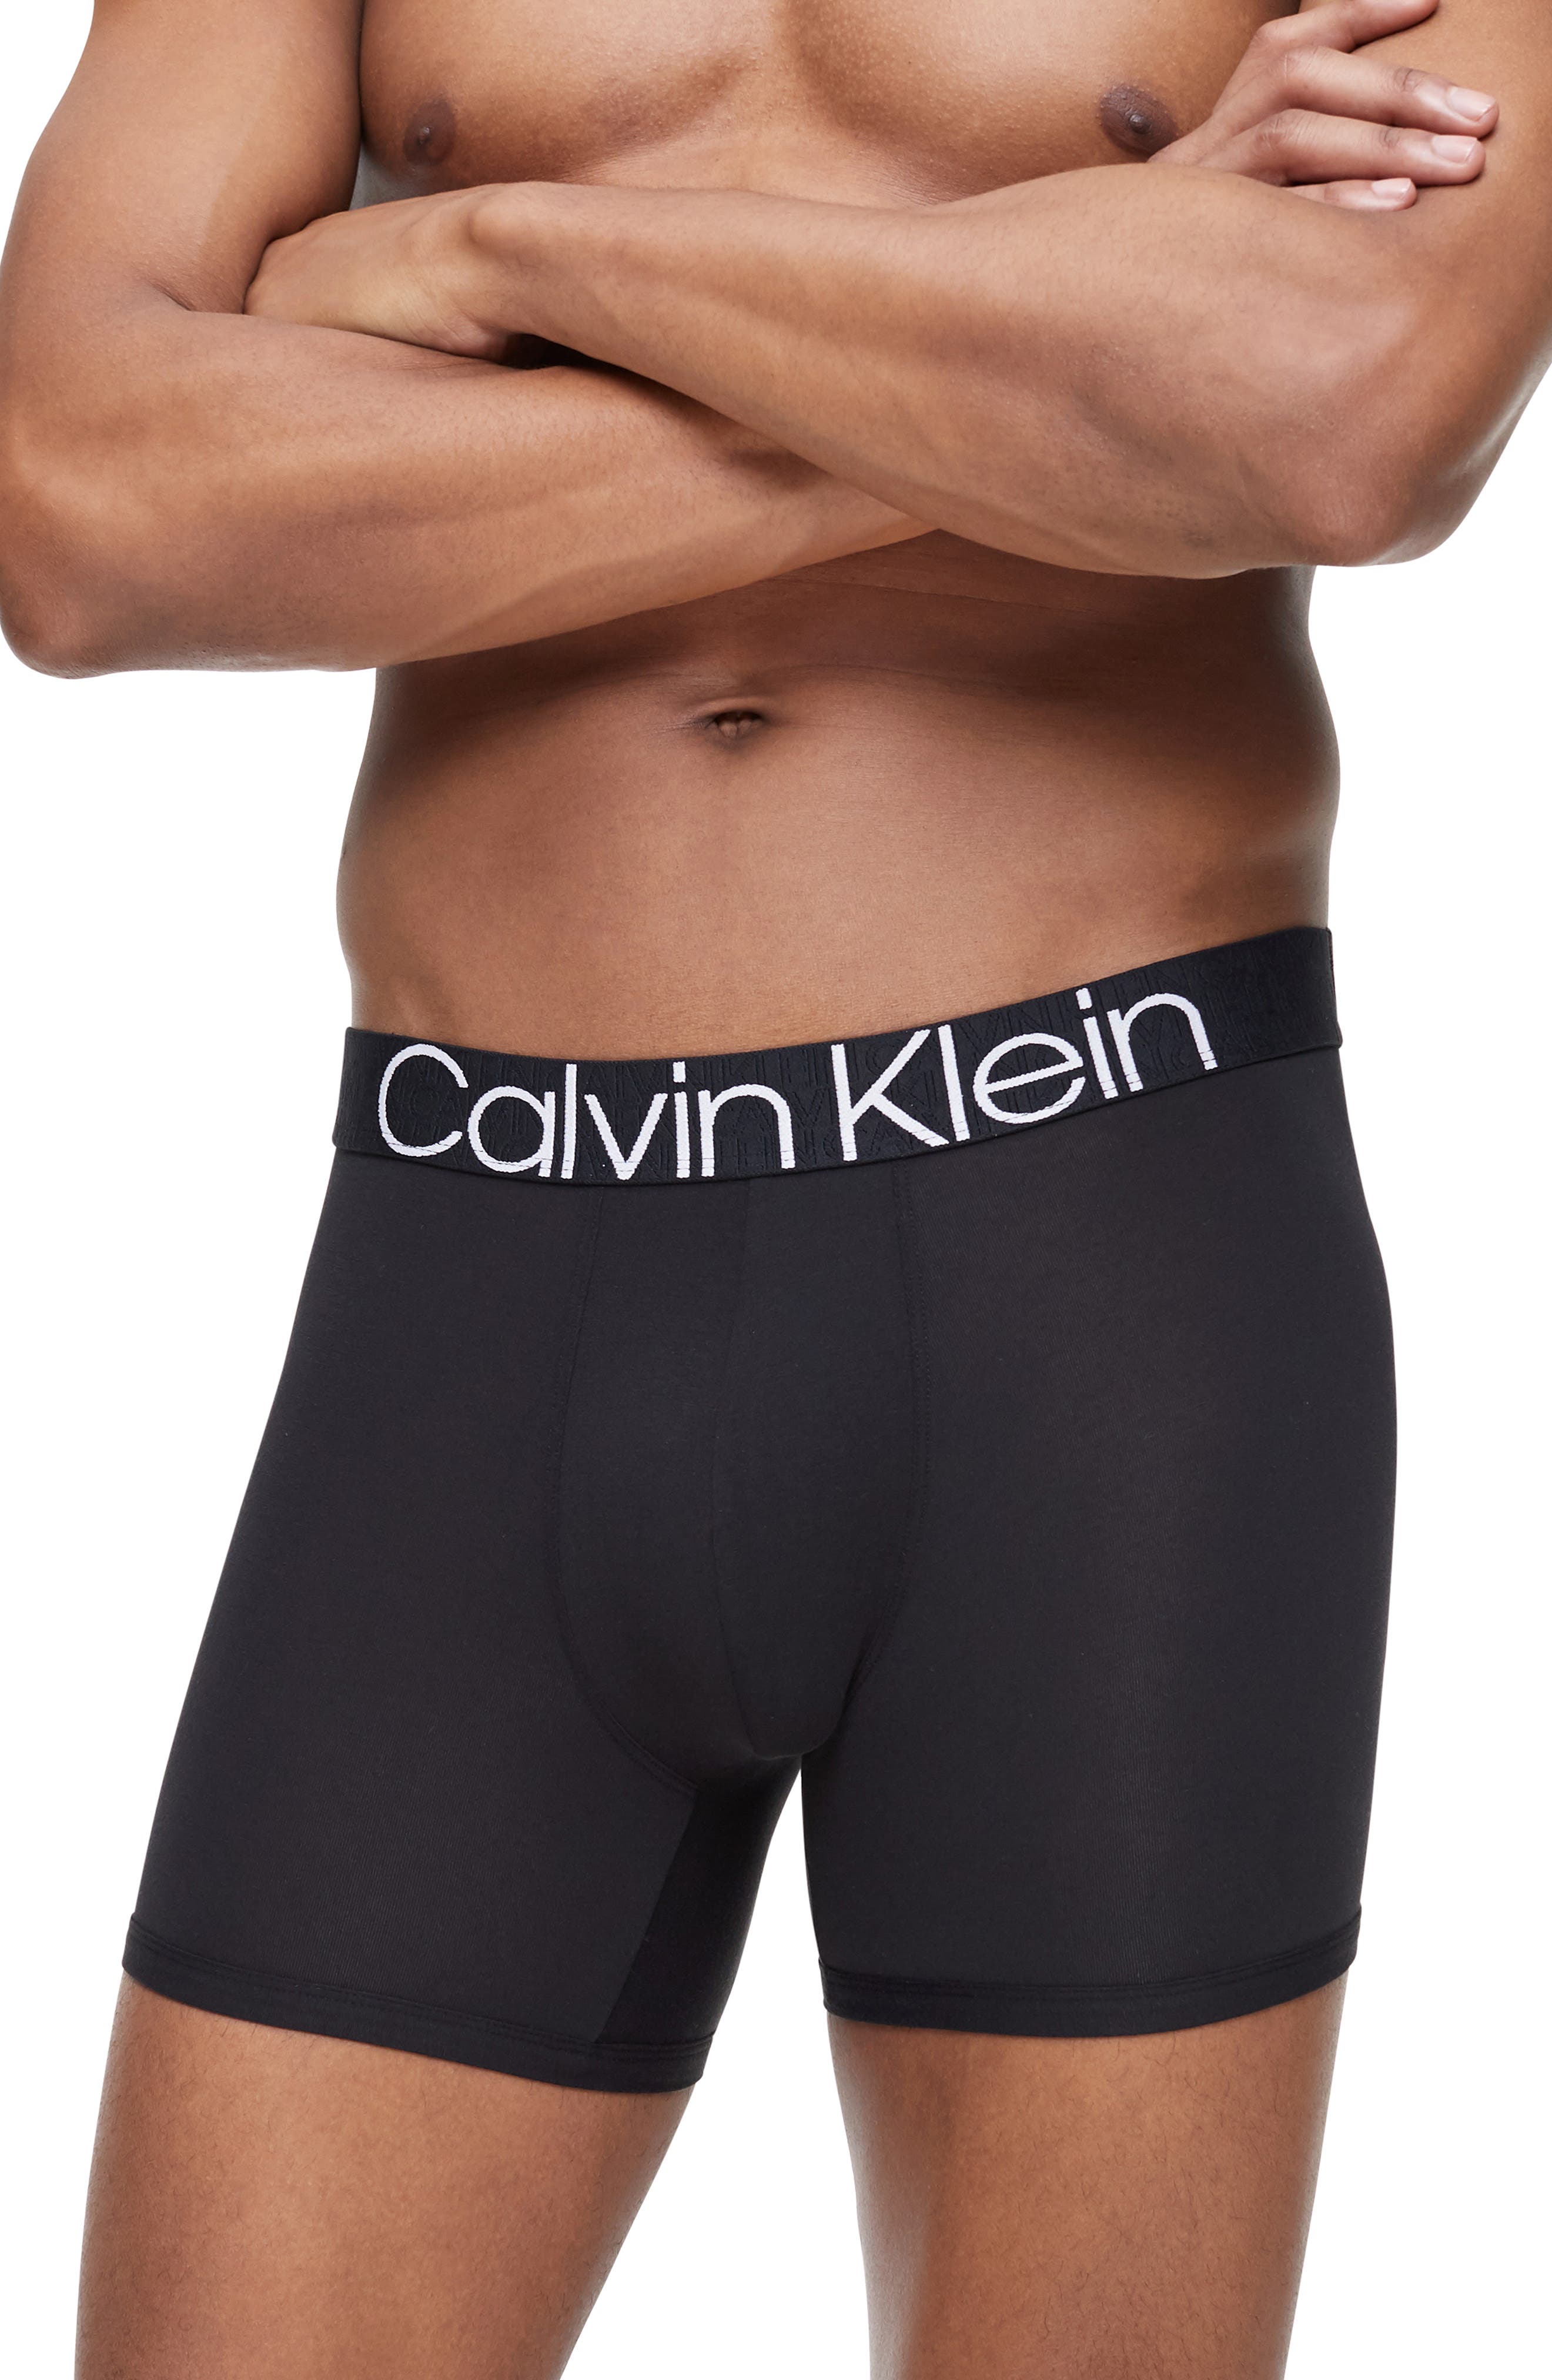 UPC 790812539330 product image for Men's Calvin Klein Eco Cotton Blend Boxer Briefs, Size Medium - Black | upcitemdb.com